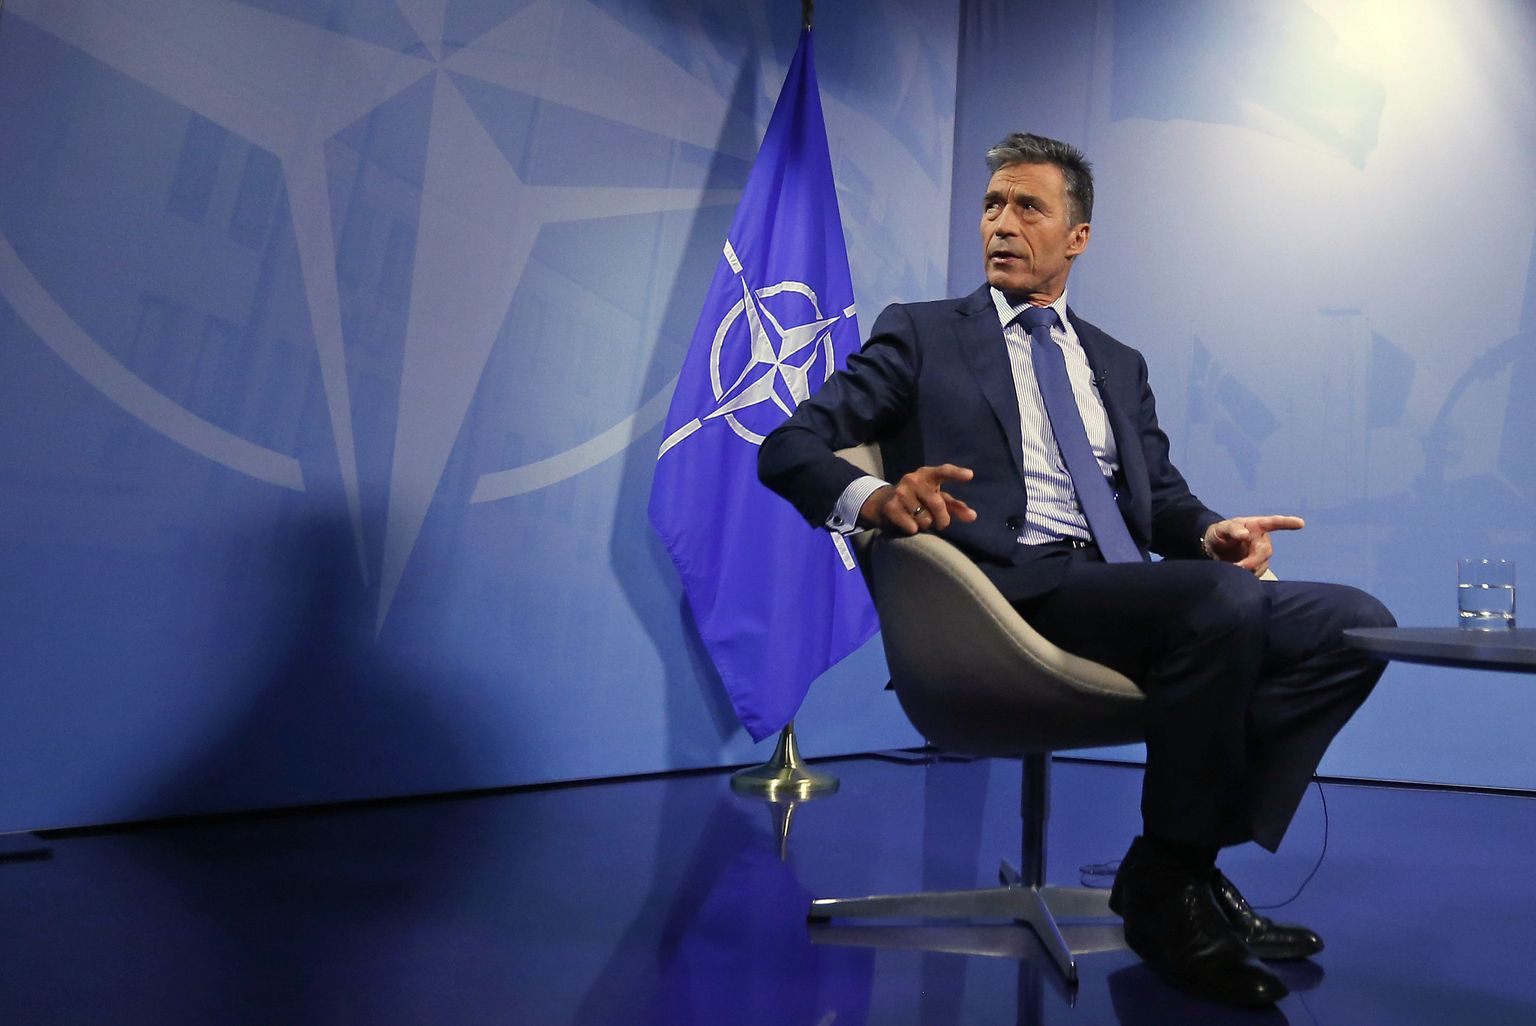 NATO peasekretär Anders Fogh Rasmussen